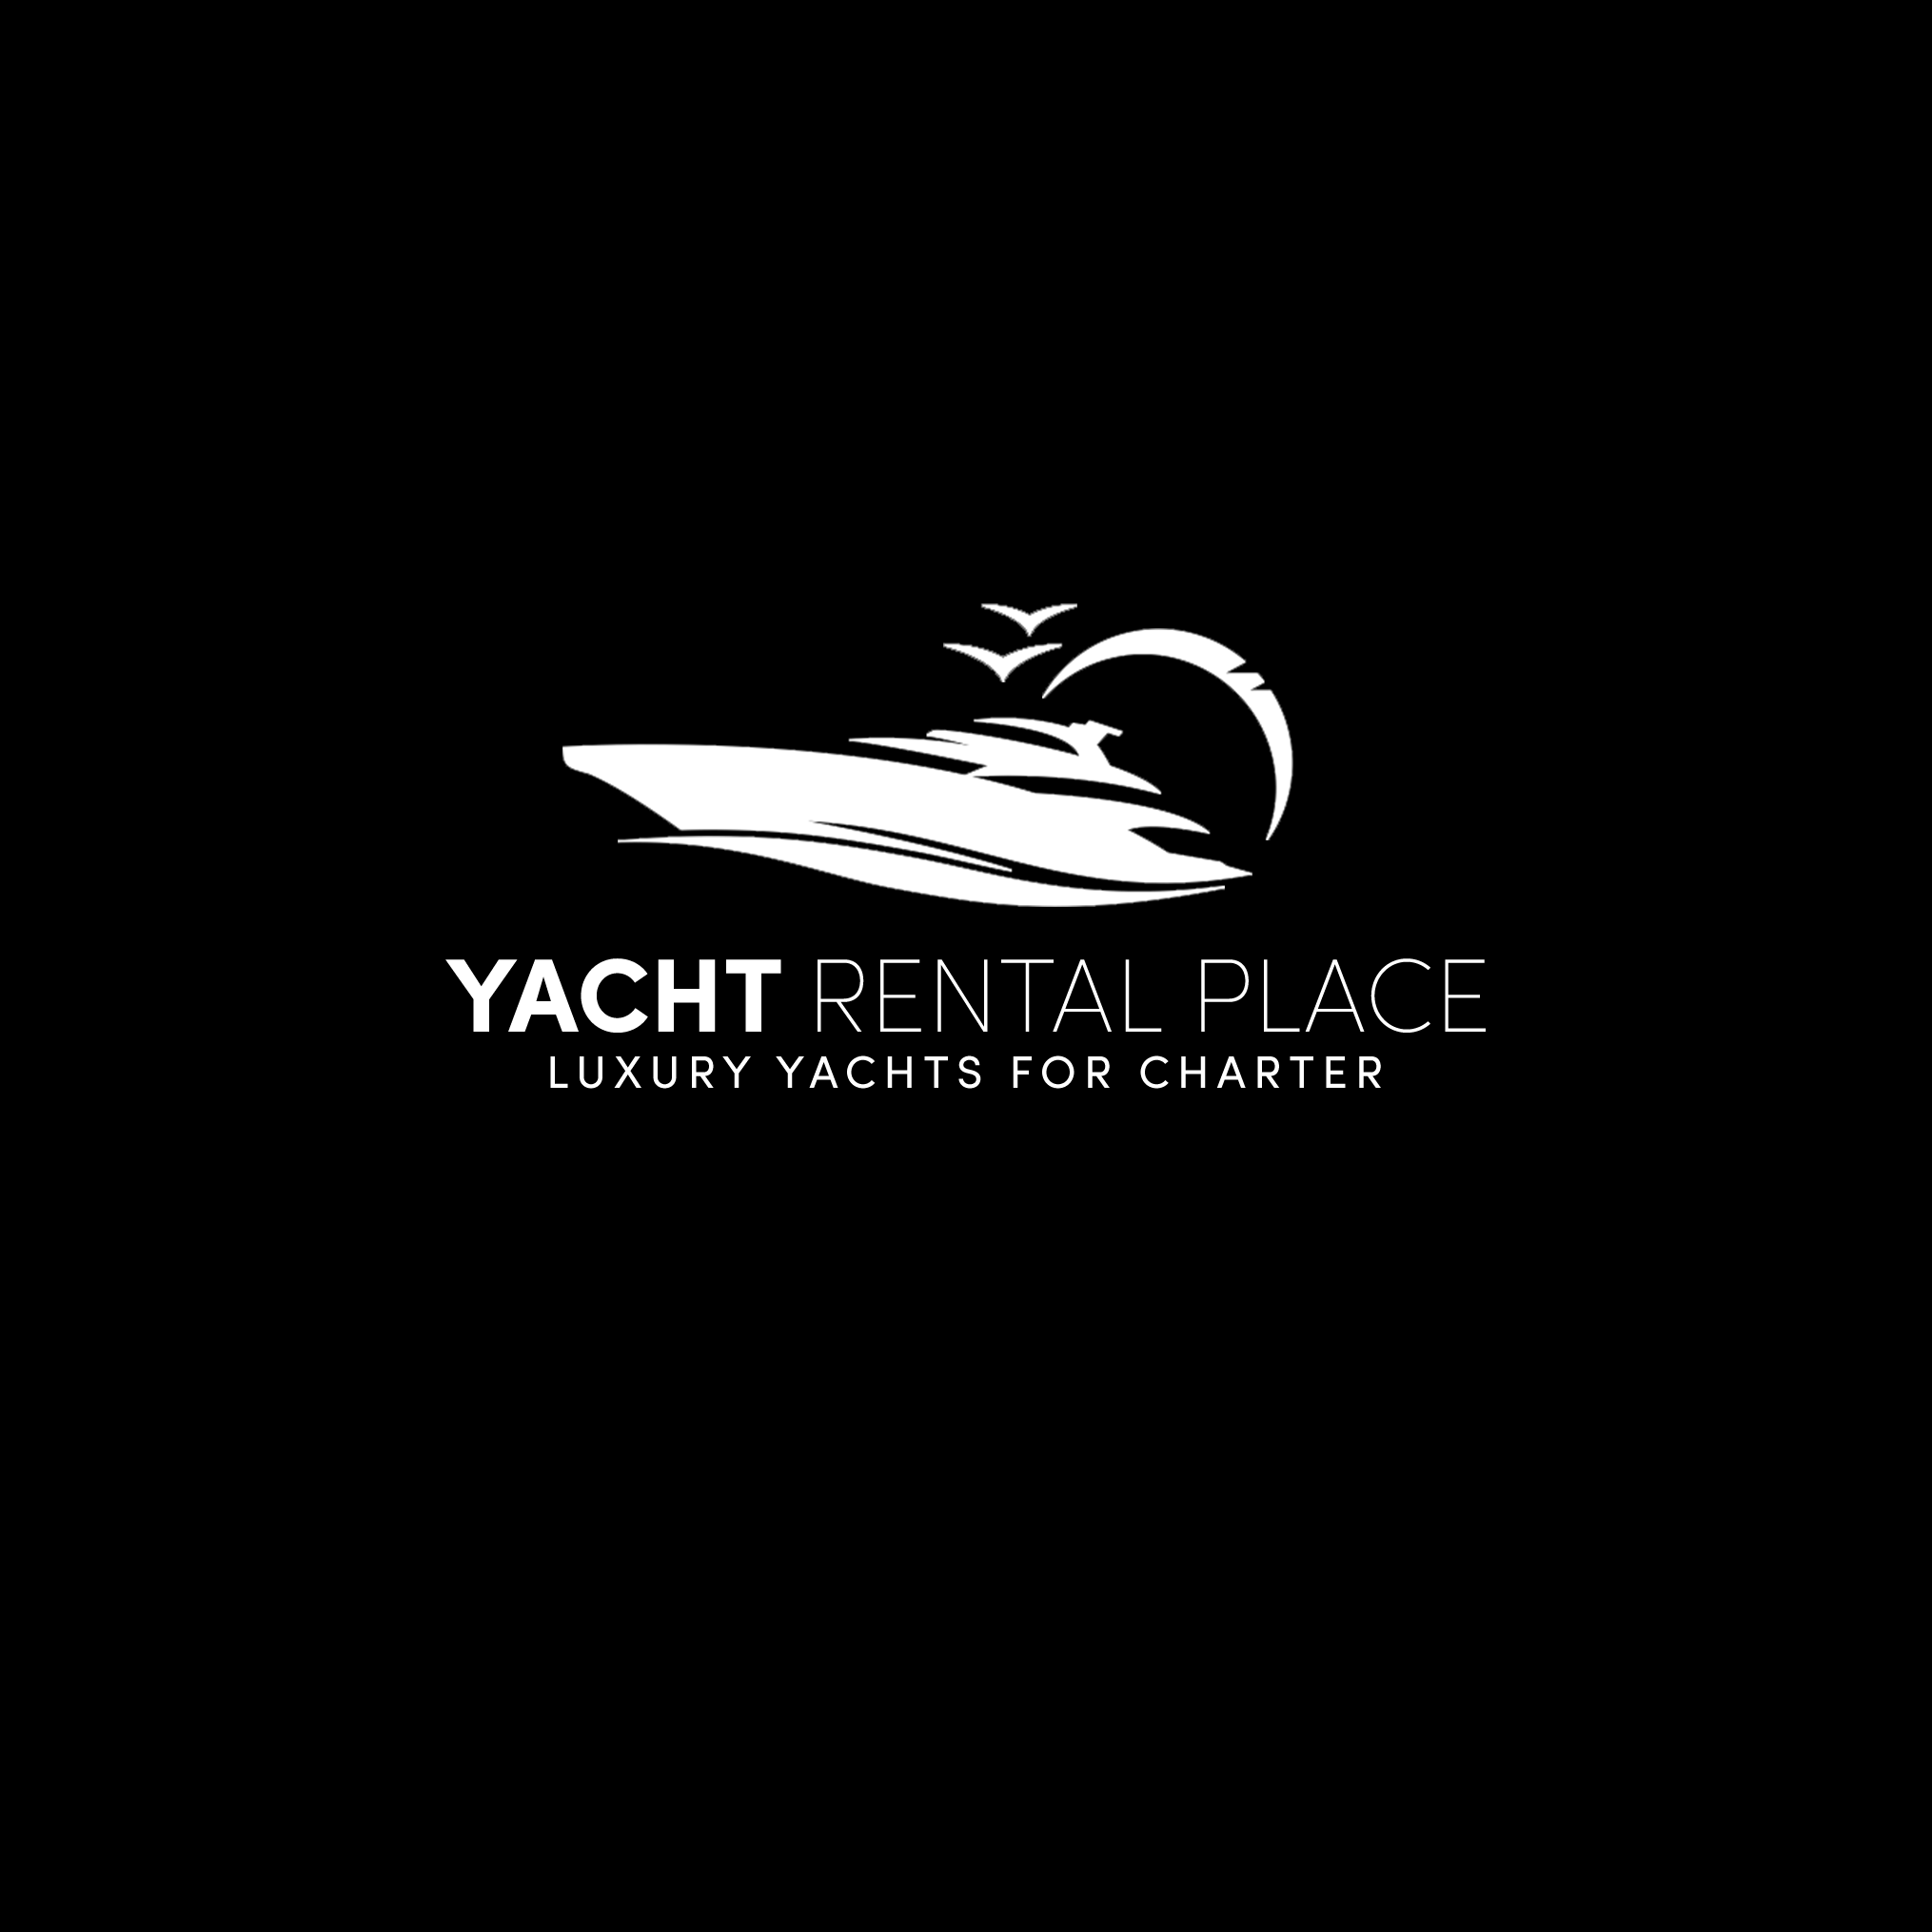 Yacht Rental Place